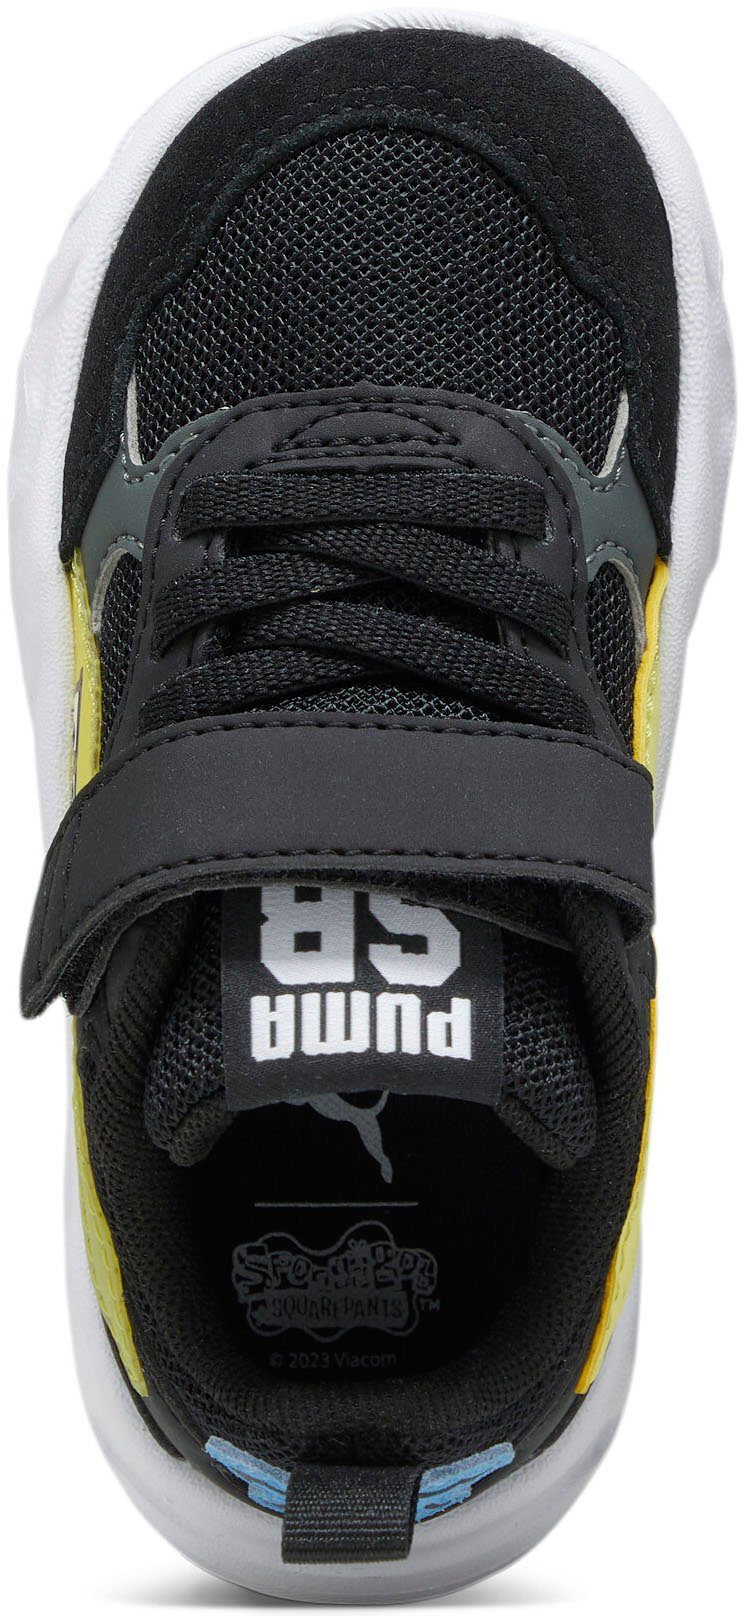 INF SPONGEBOB TRINITY PUMA Sneaker AC+